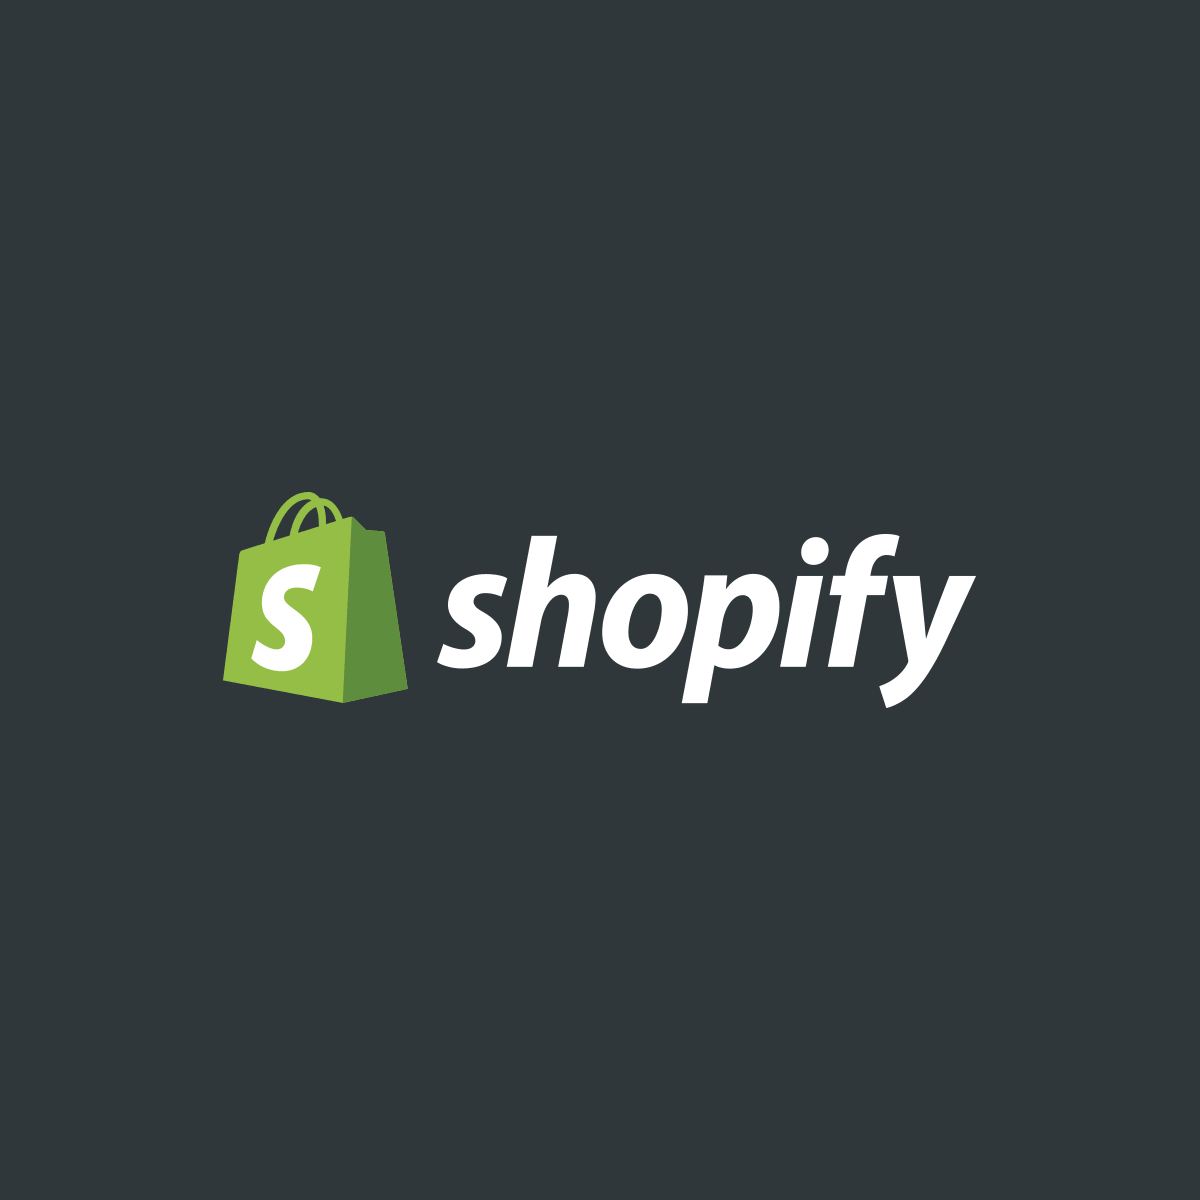 Shopify Logo Png Hdpng.com 1200 - Shopify, Transparent background PNG HD thumbnail